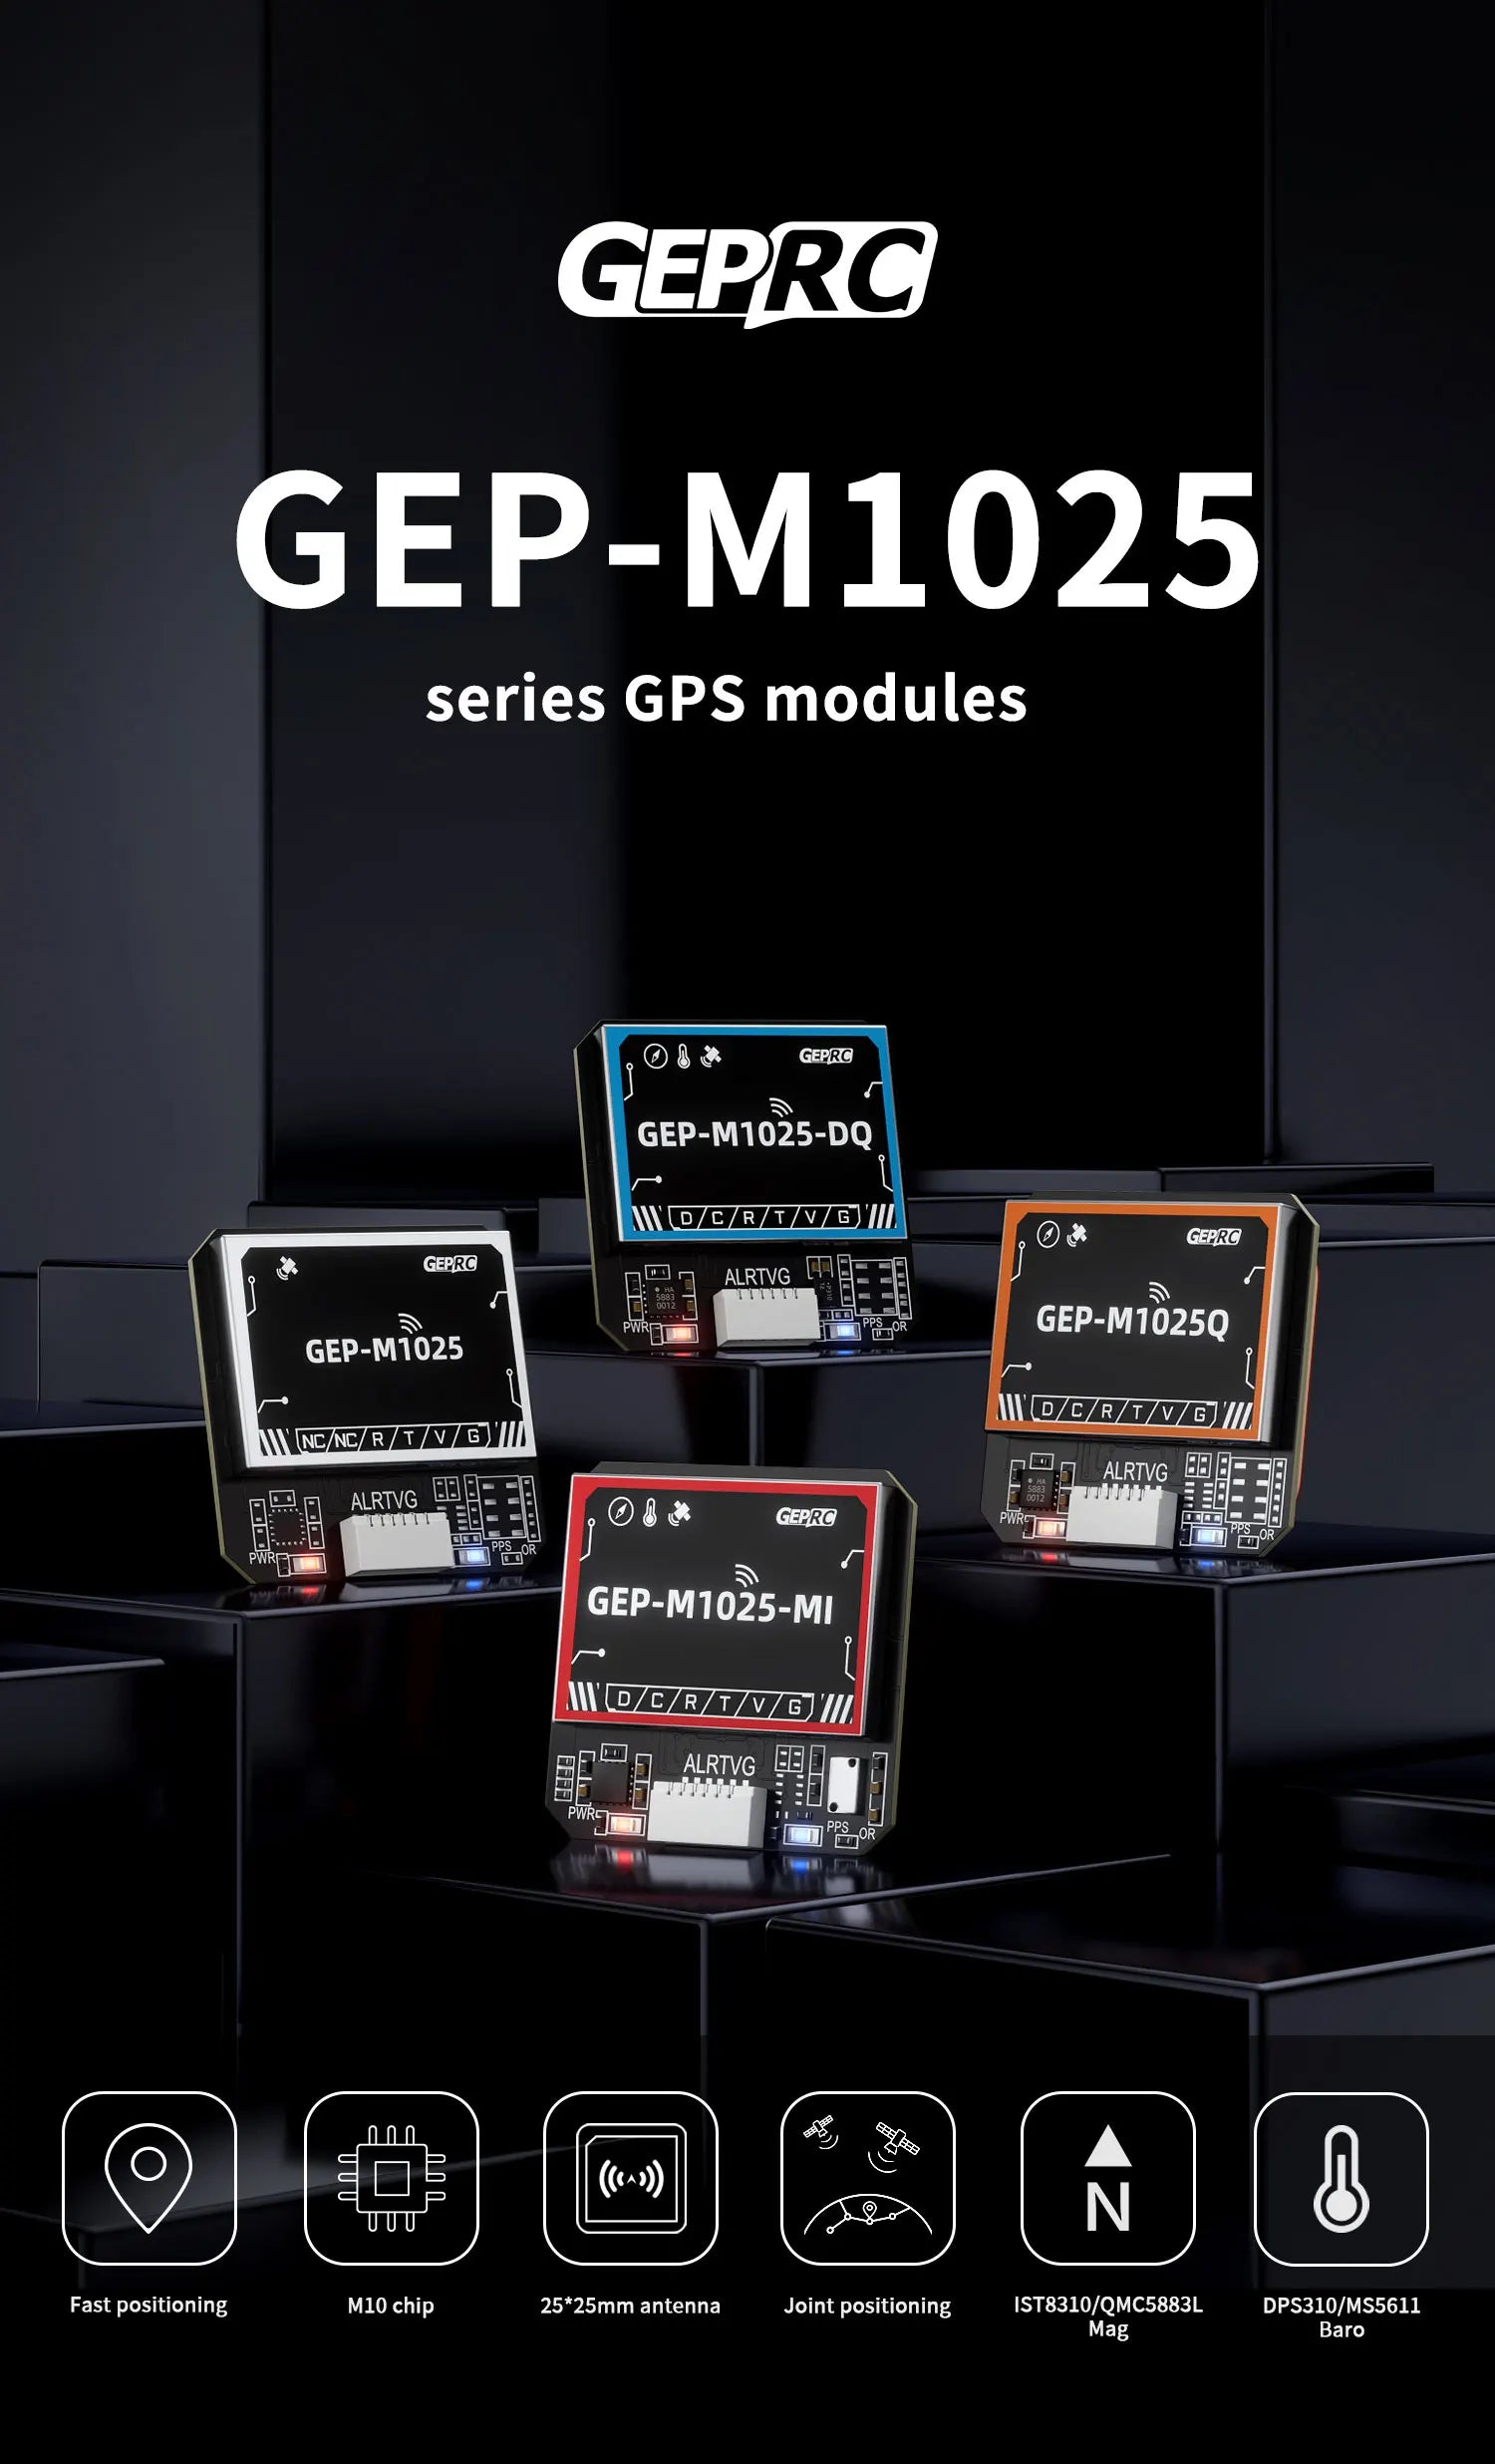 GEPRC GEP-M1025 Series - GPS, GPS modules GEPRG GEP-M1025-DQ DC GEPRC G